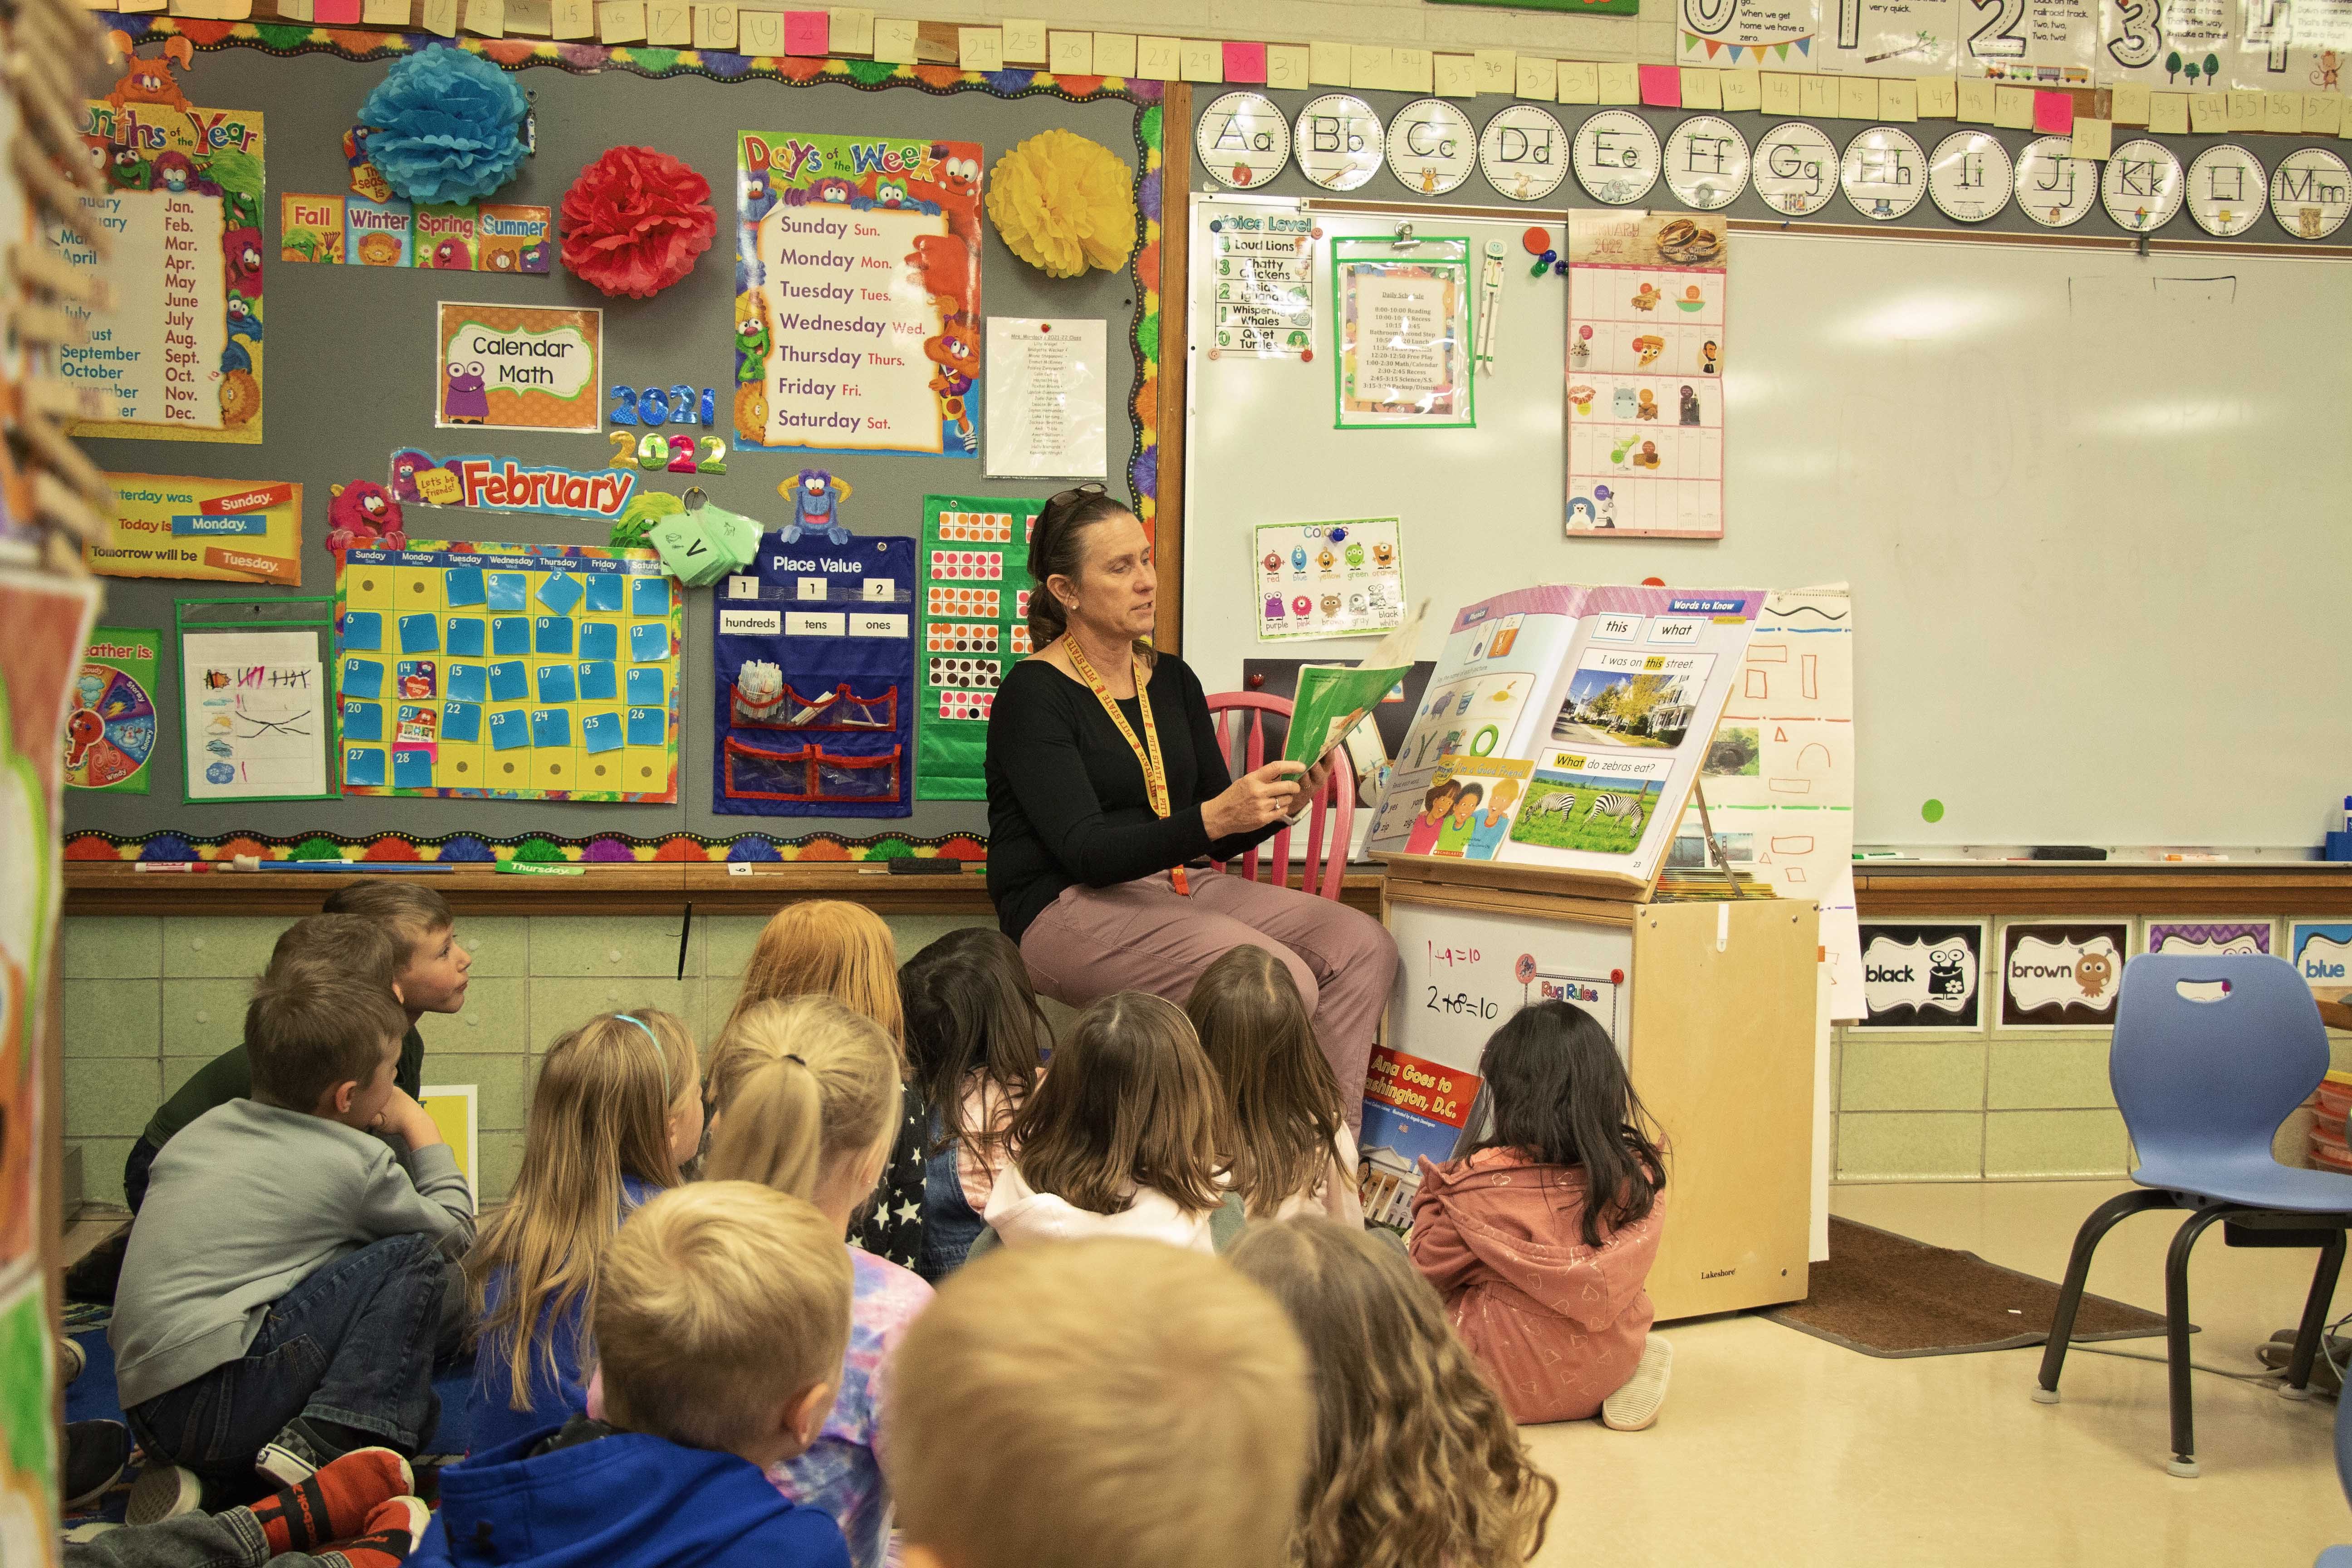 Kindergarten teacher reading book in front of students in a classroom.